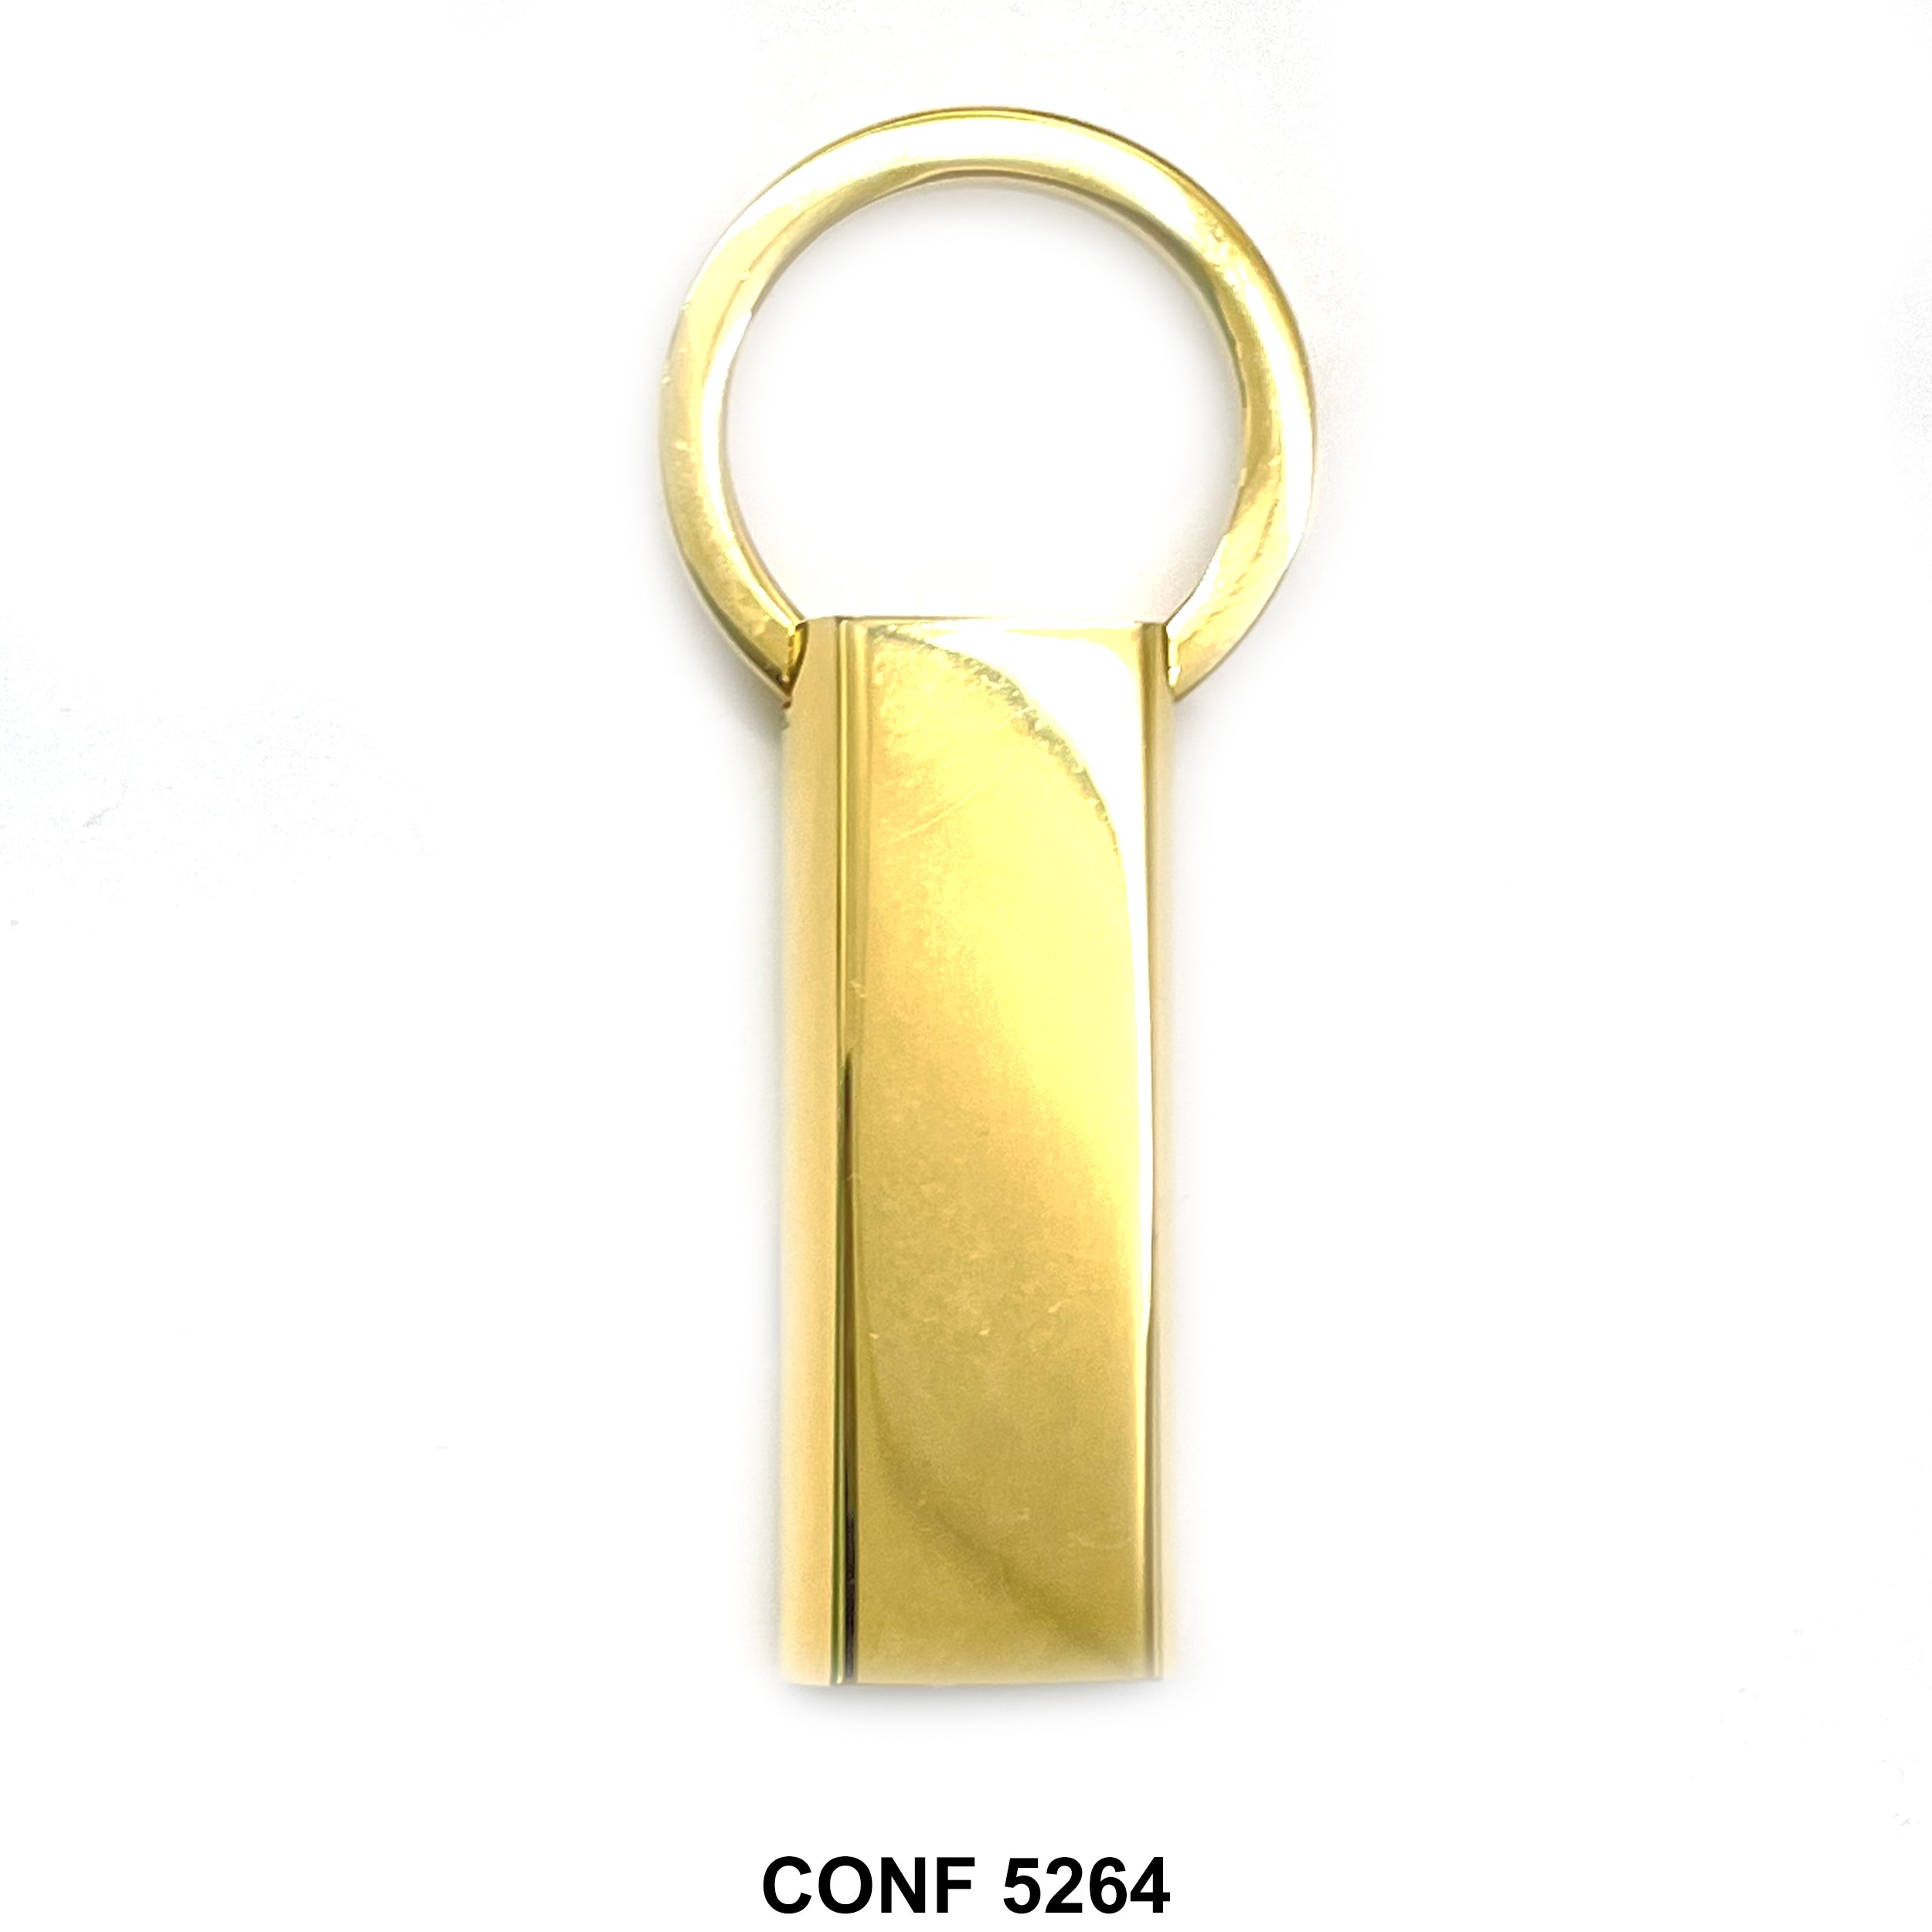 Pull Twist Whistle Keychain CONF 5264